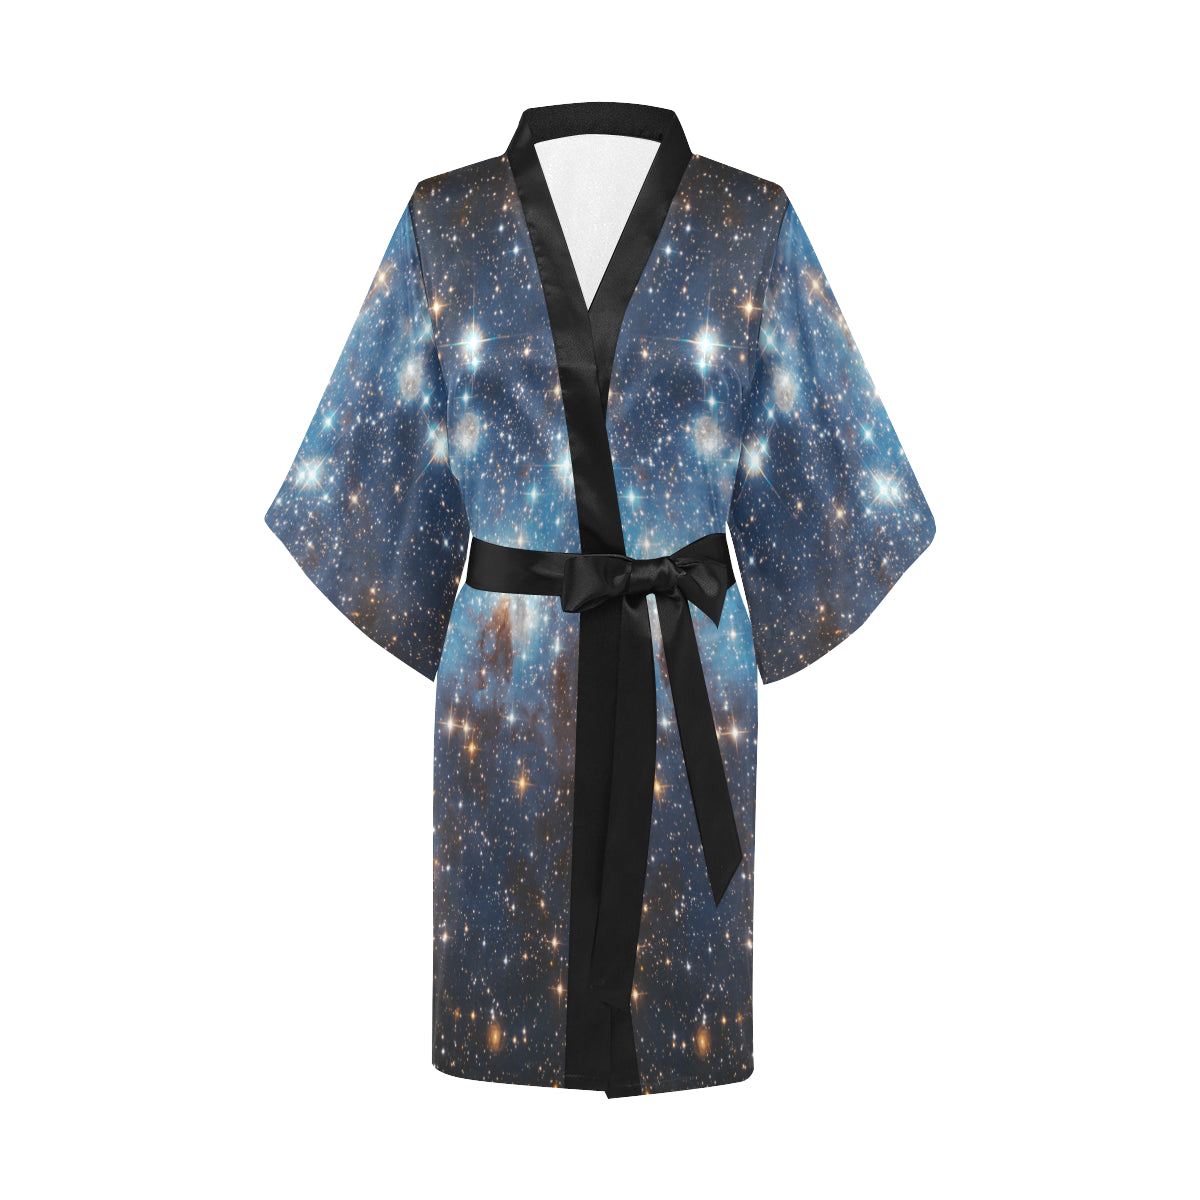 Short sexy kimono robe for women – Beautiful Robes